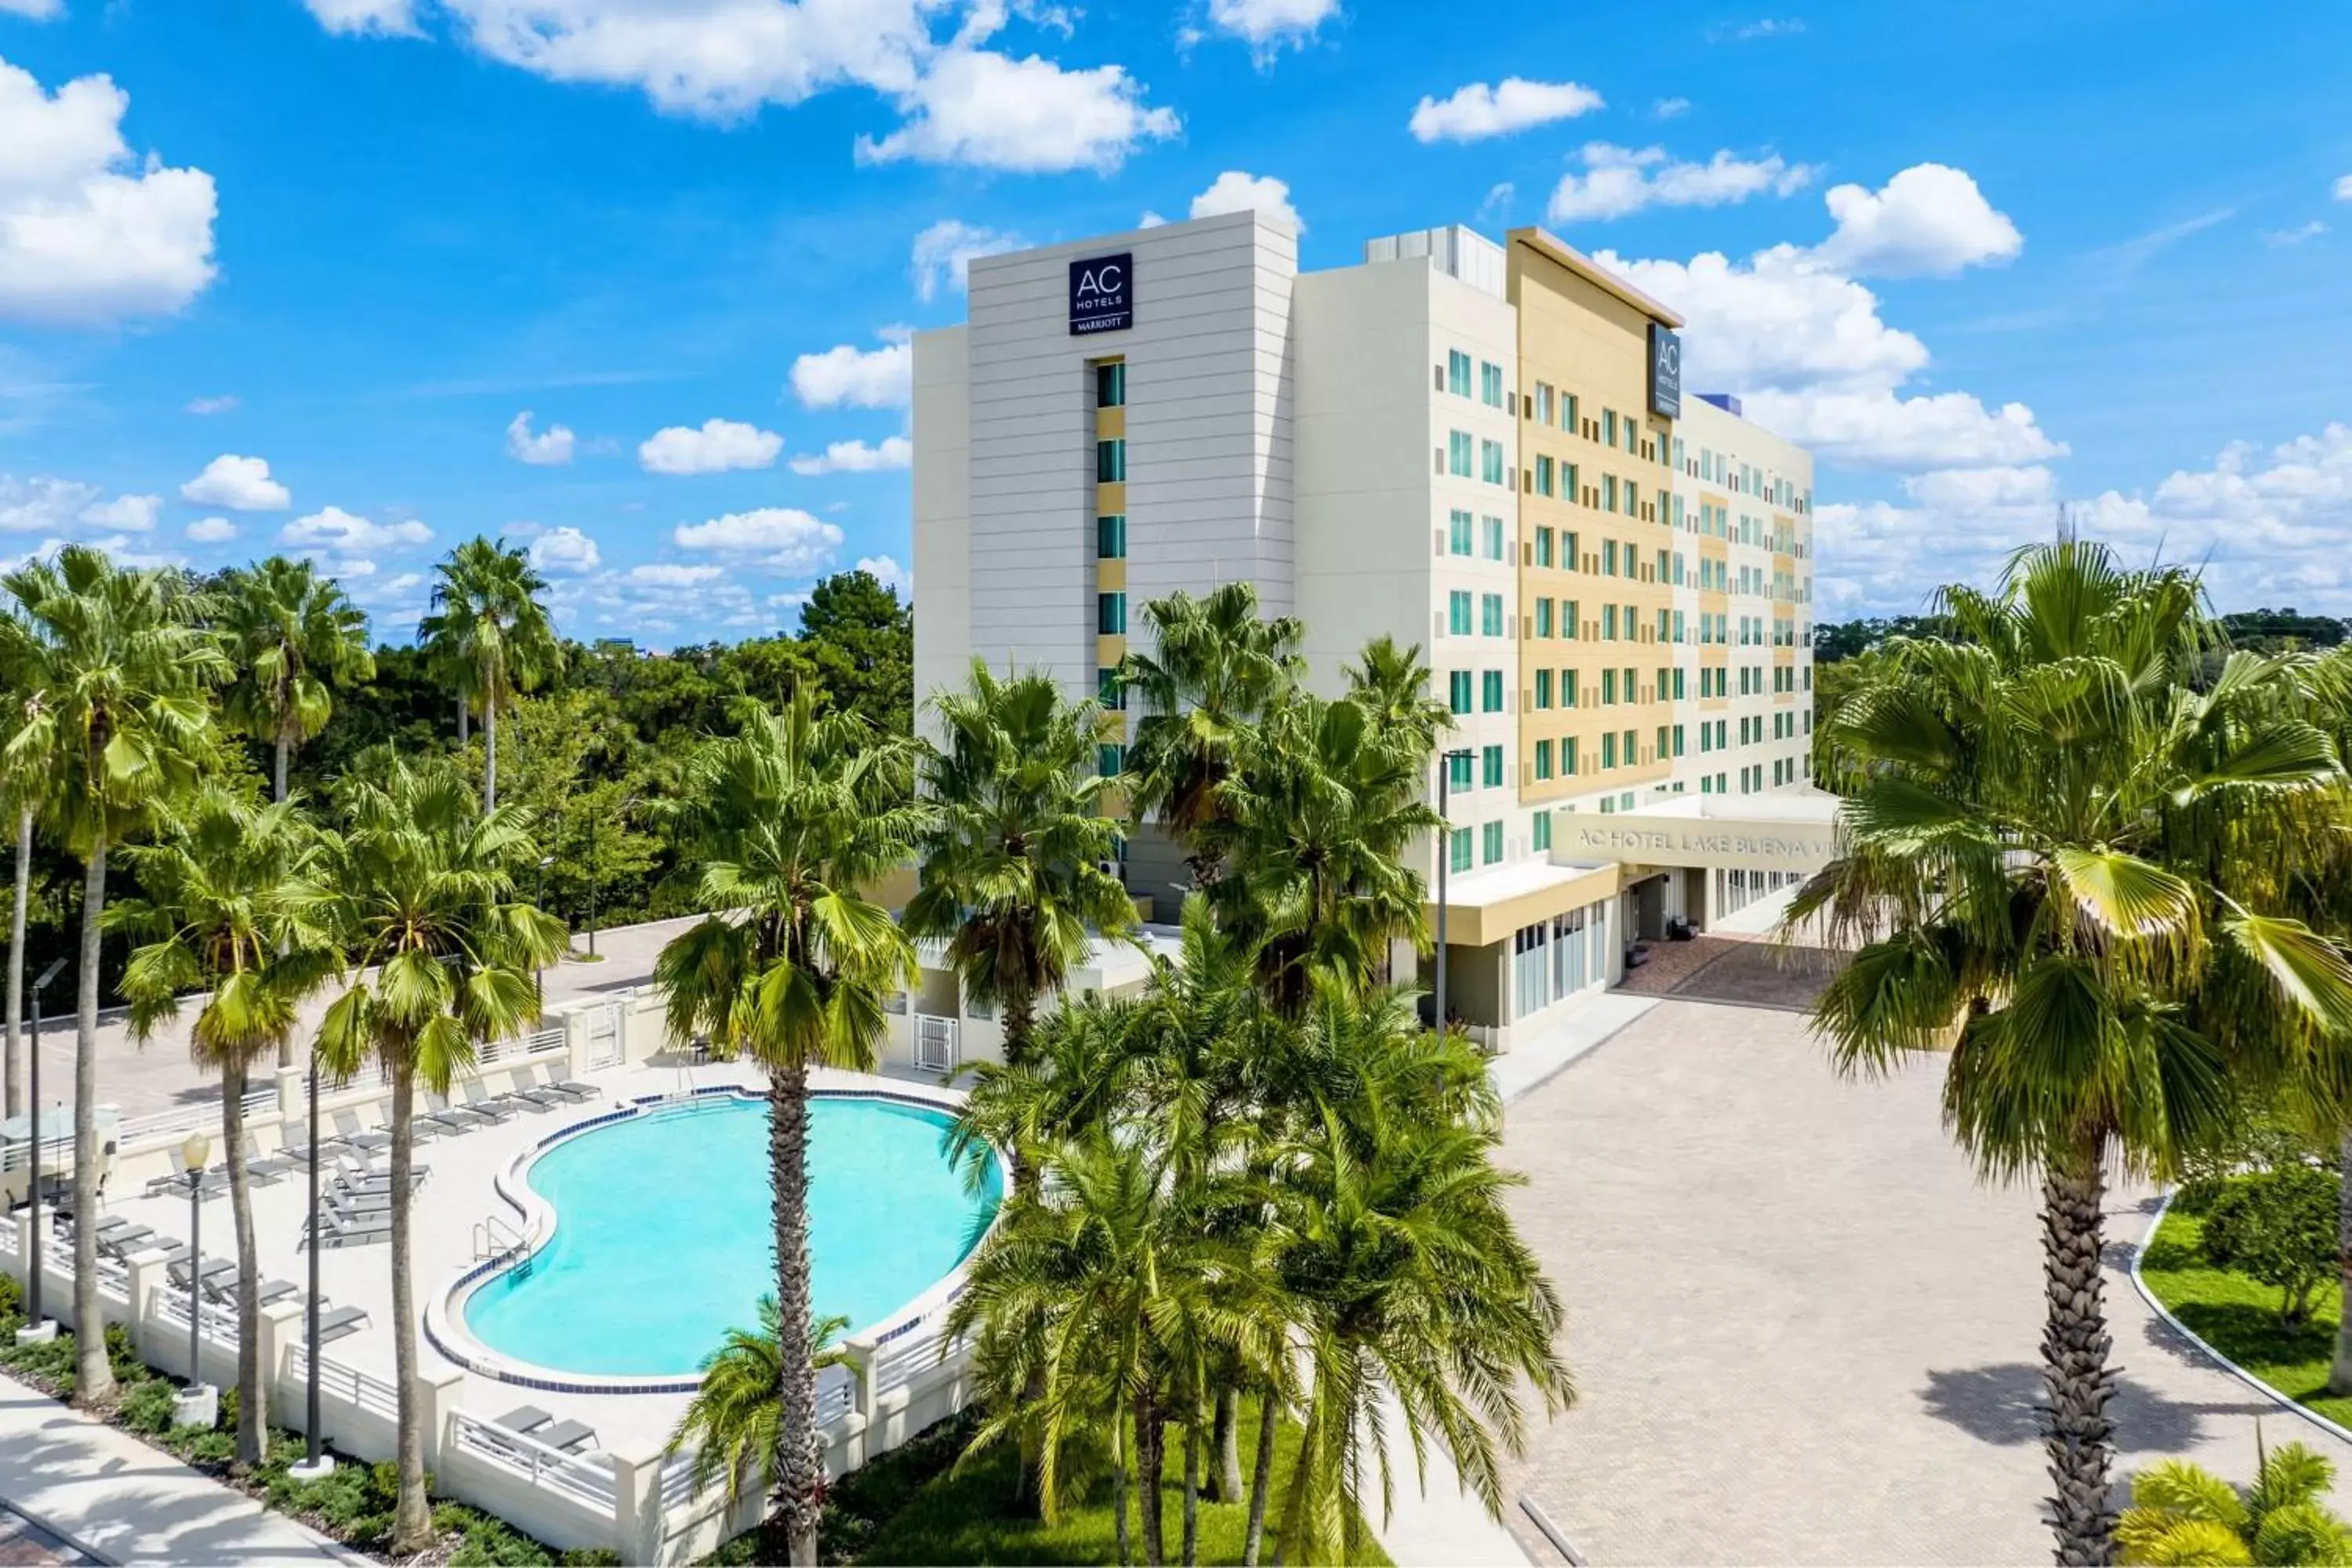 Property building, Pool View in AC Hotel by Marriott Orlando Lake Buena Vista